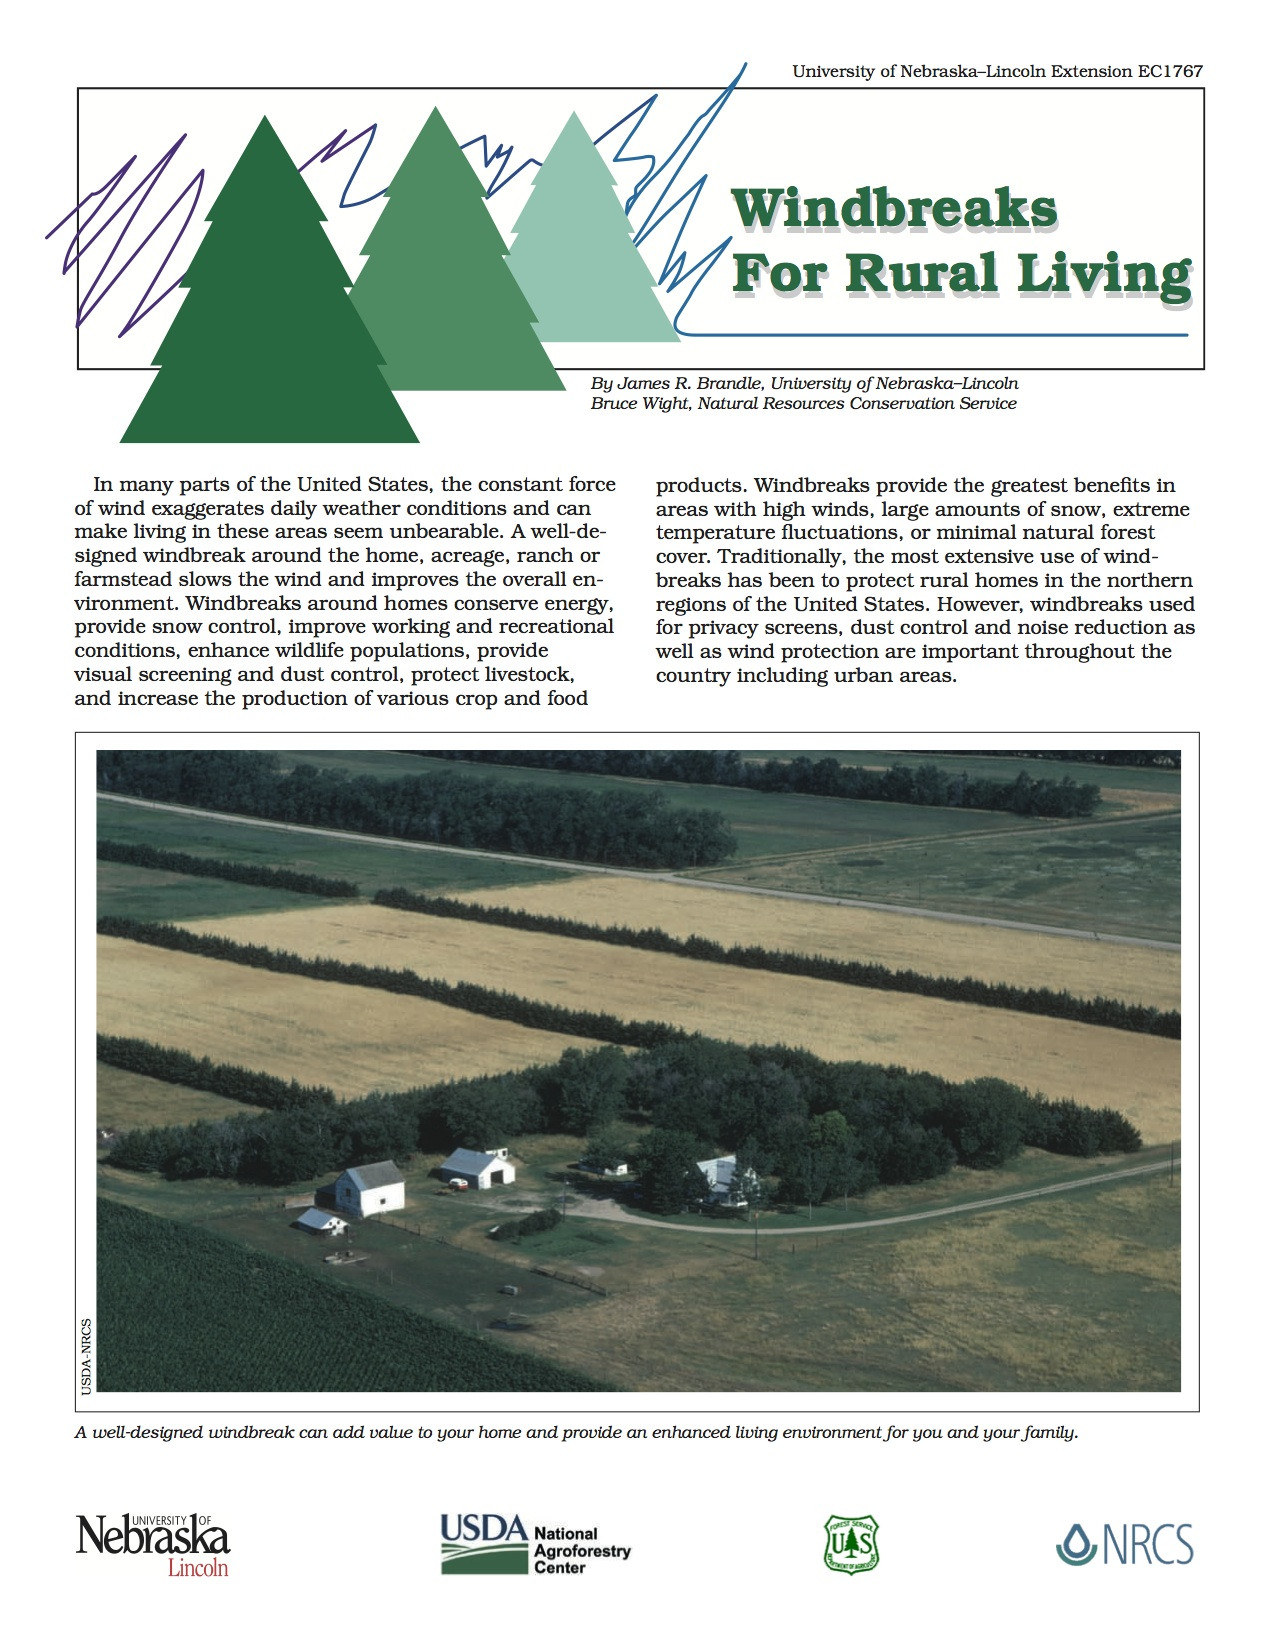 Windbreaks for Rural Living